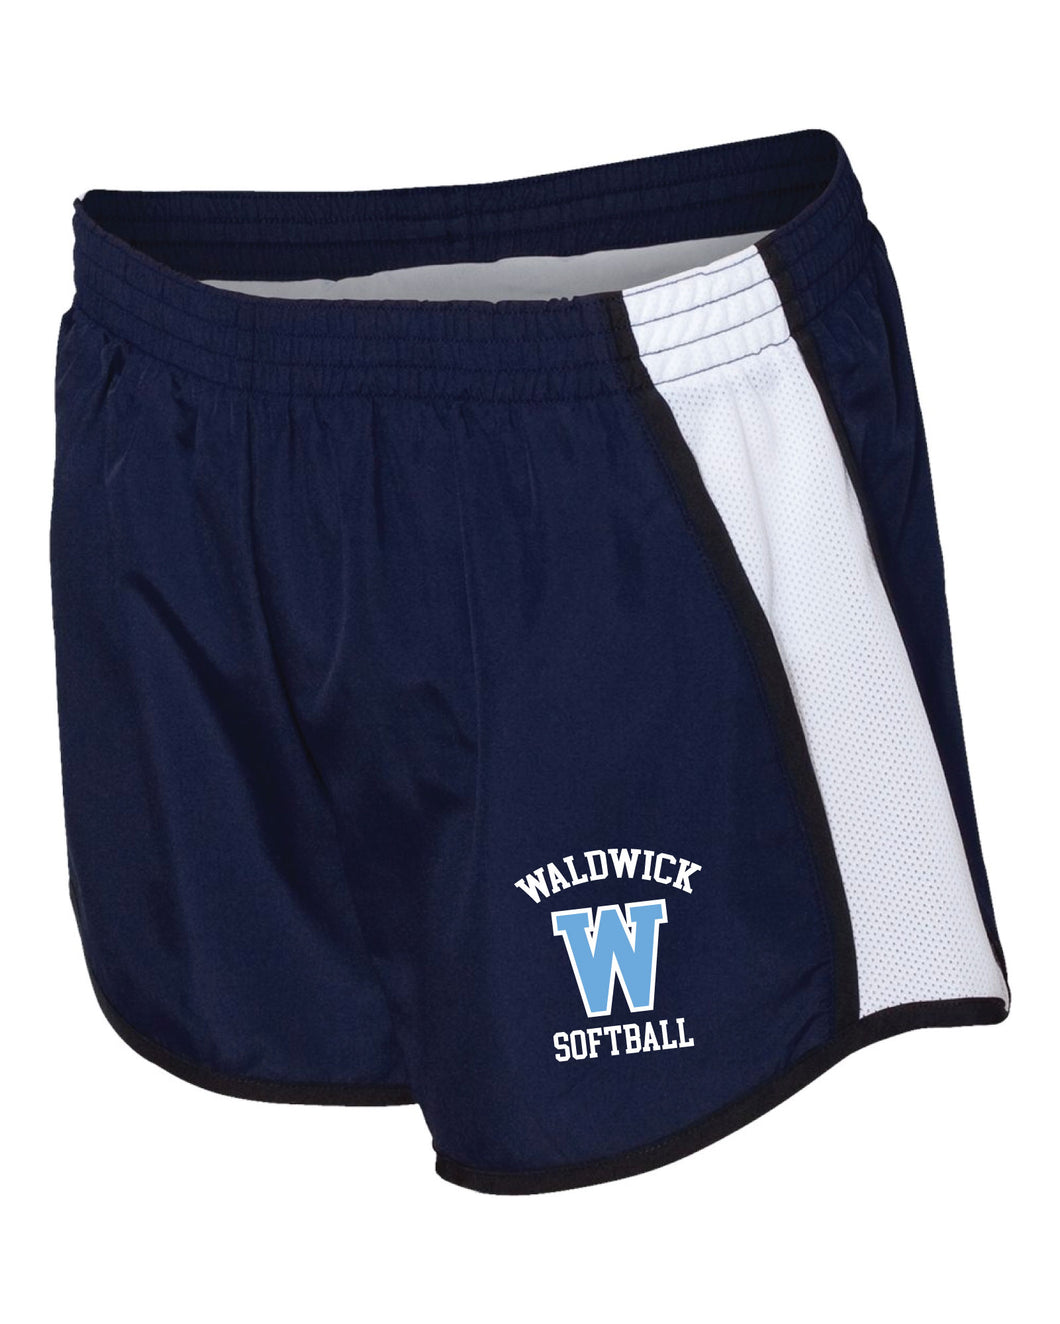 Waldwick Softball Athletic Shorts - Navy